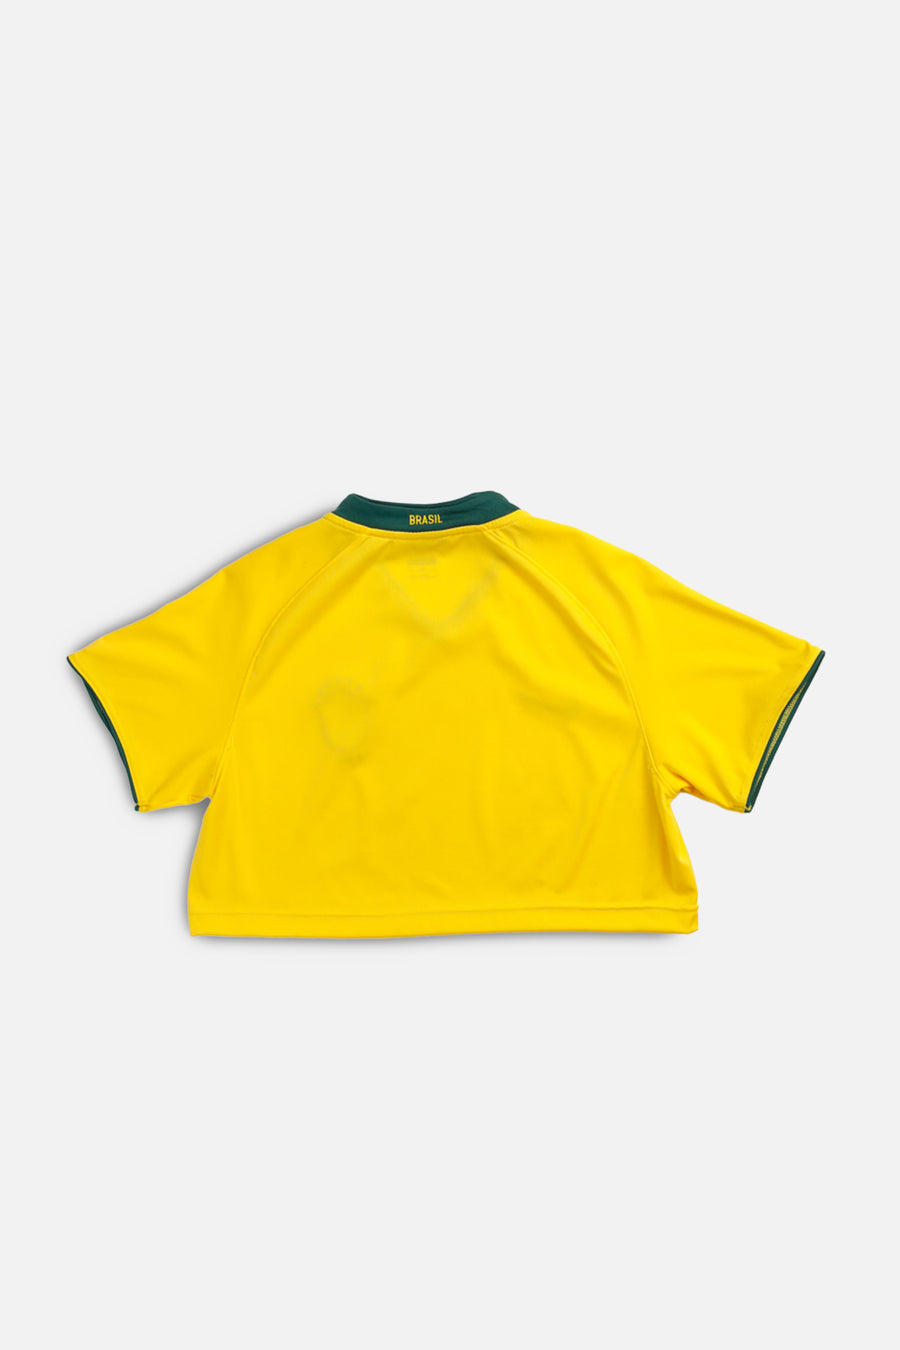 Rework Crop Brazil Soccer Jersey - S